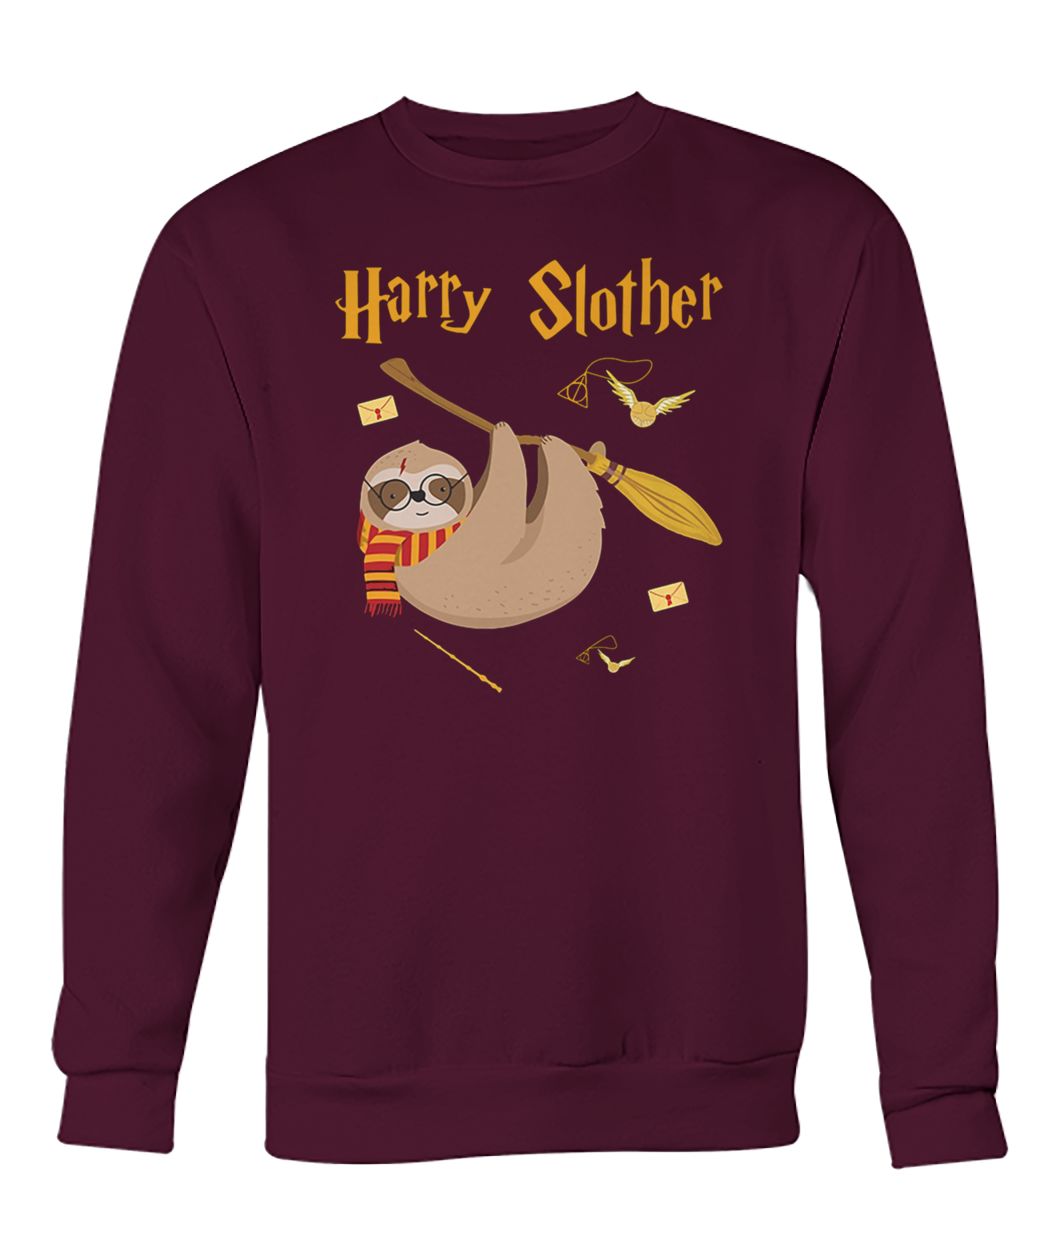 Harry potter sloth harry slother crew neck sweatshirt